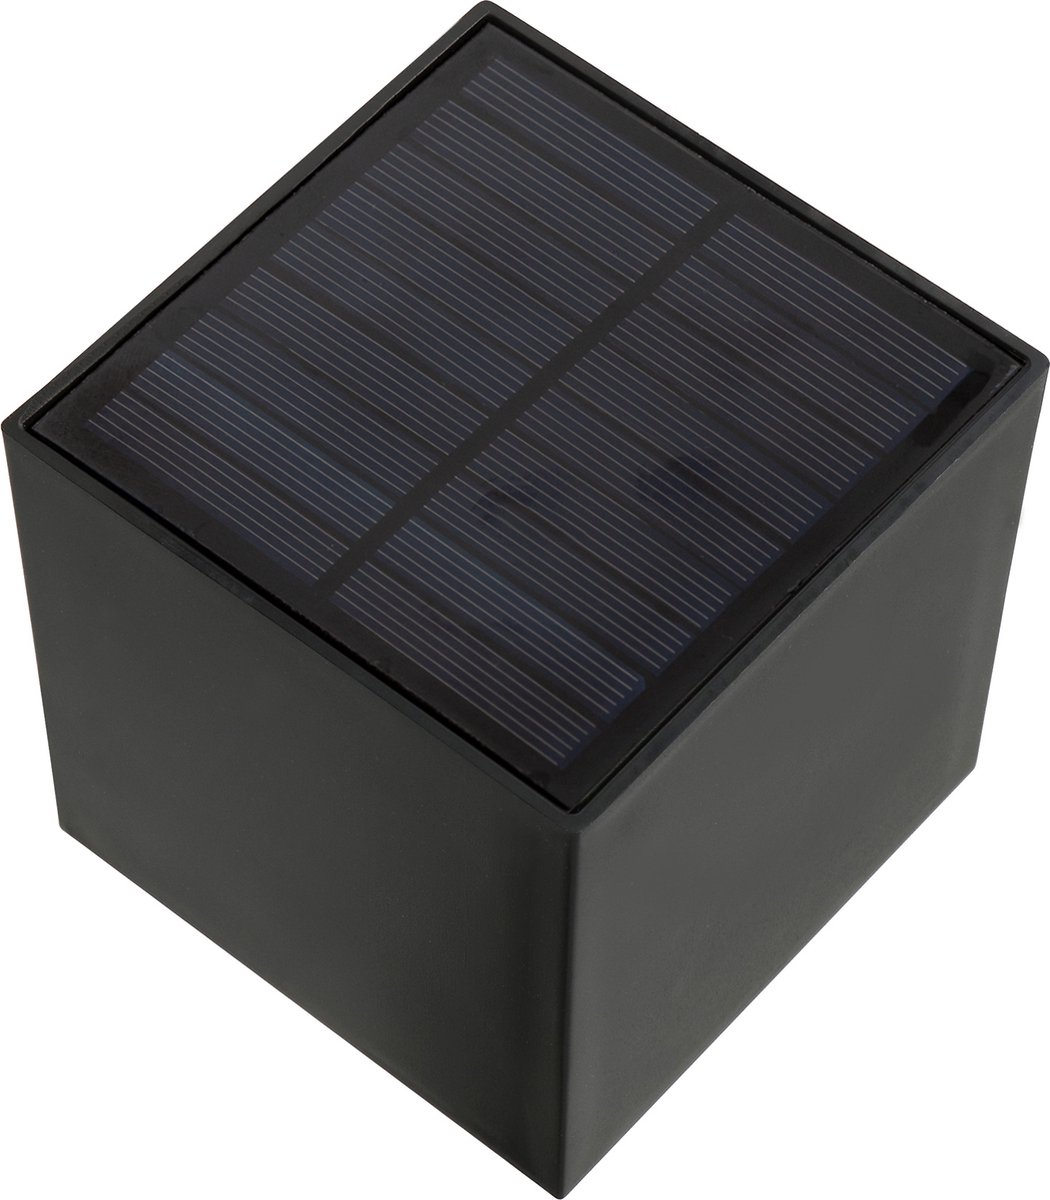 KS Verlichting Cube 10 stuks Led Solar wandlamp zwart schutting lamp solar buitenlamp 10x10 cm LED